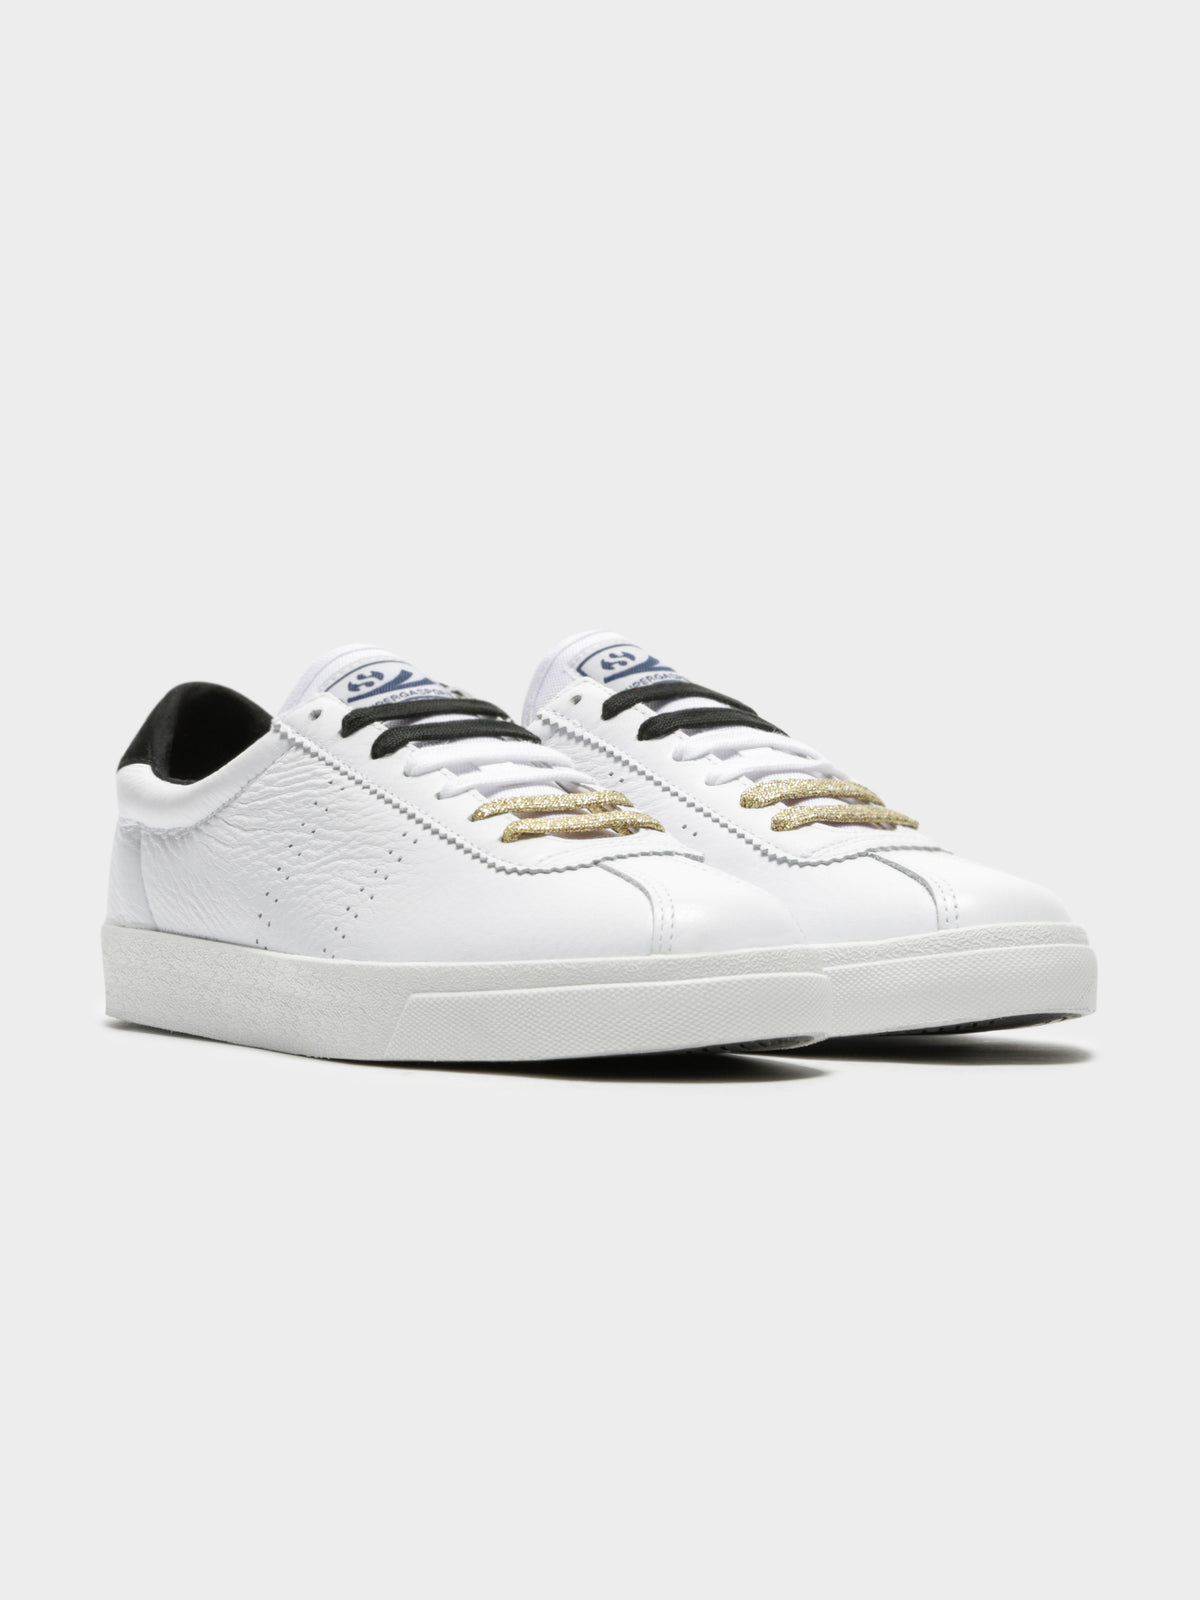 Unisex 2843 Clubs Comfleasueu Sneakers in White &amp; Black